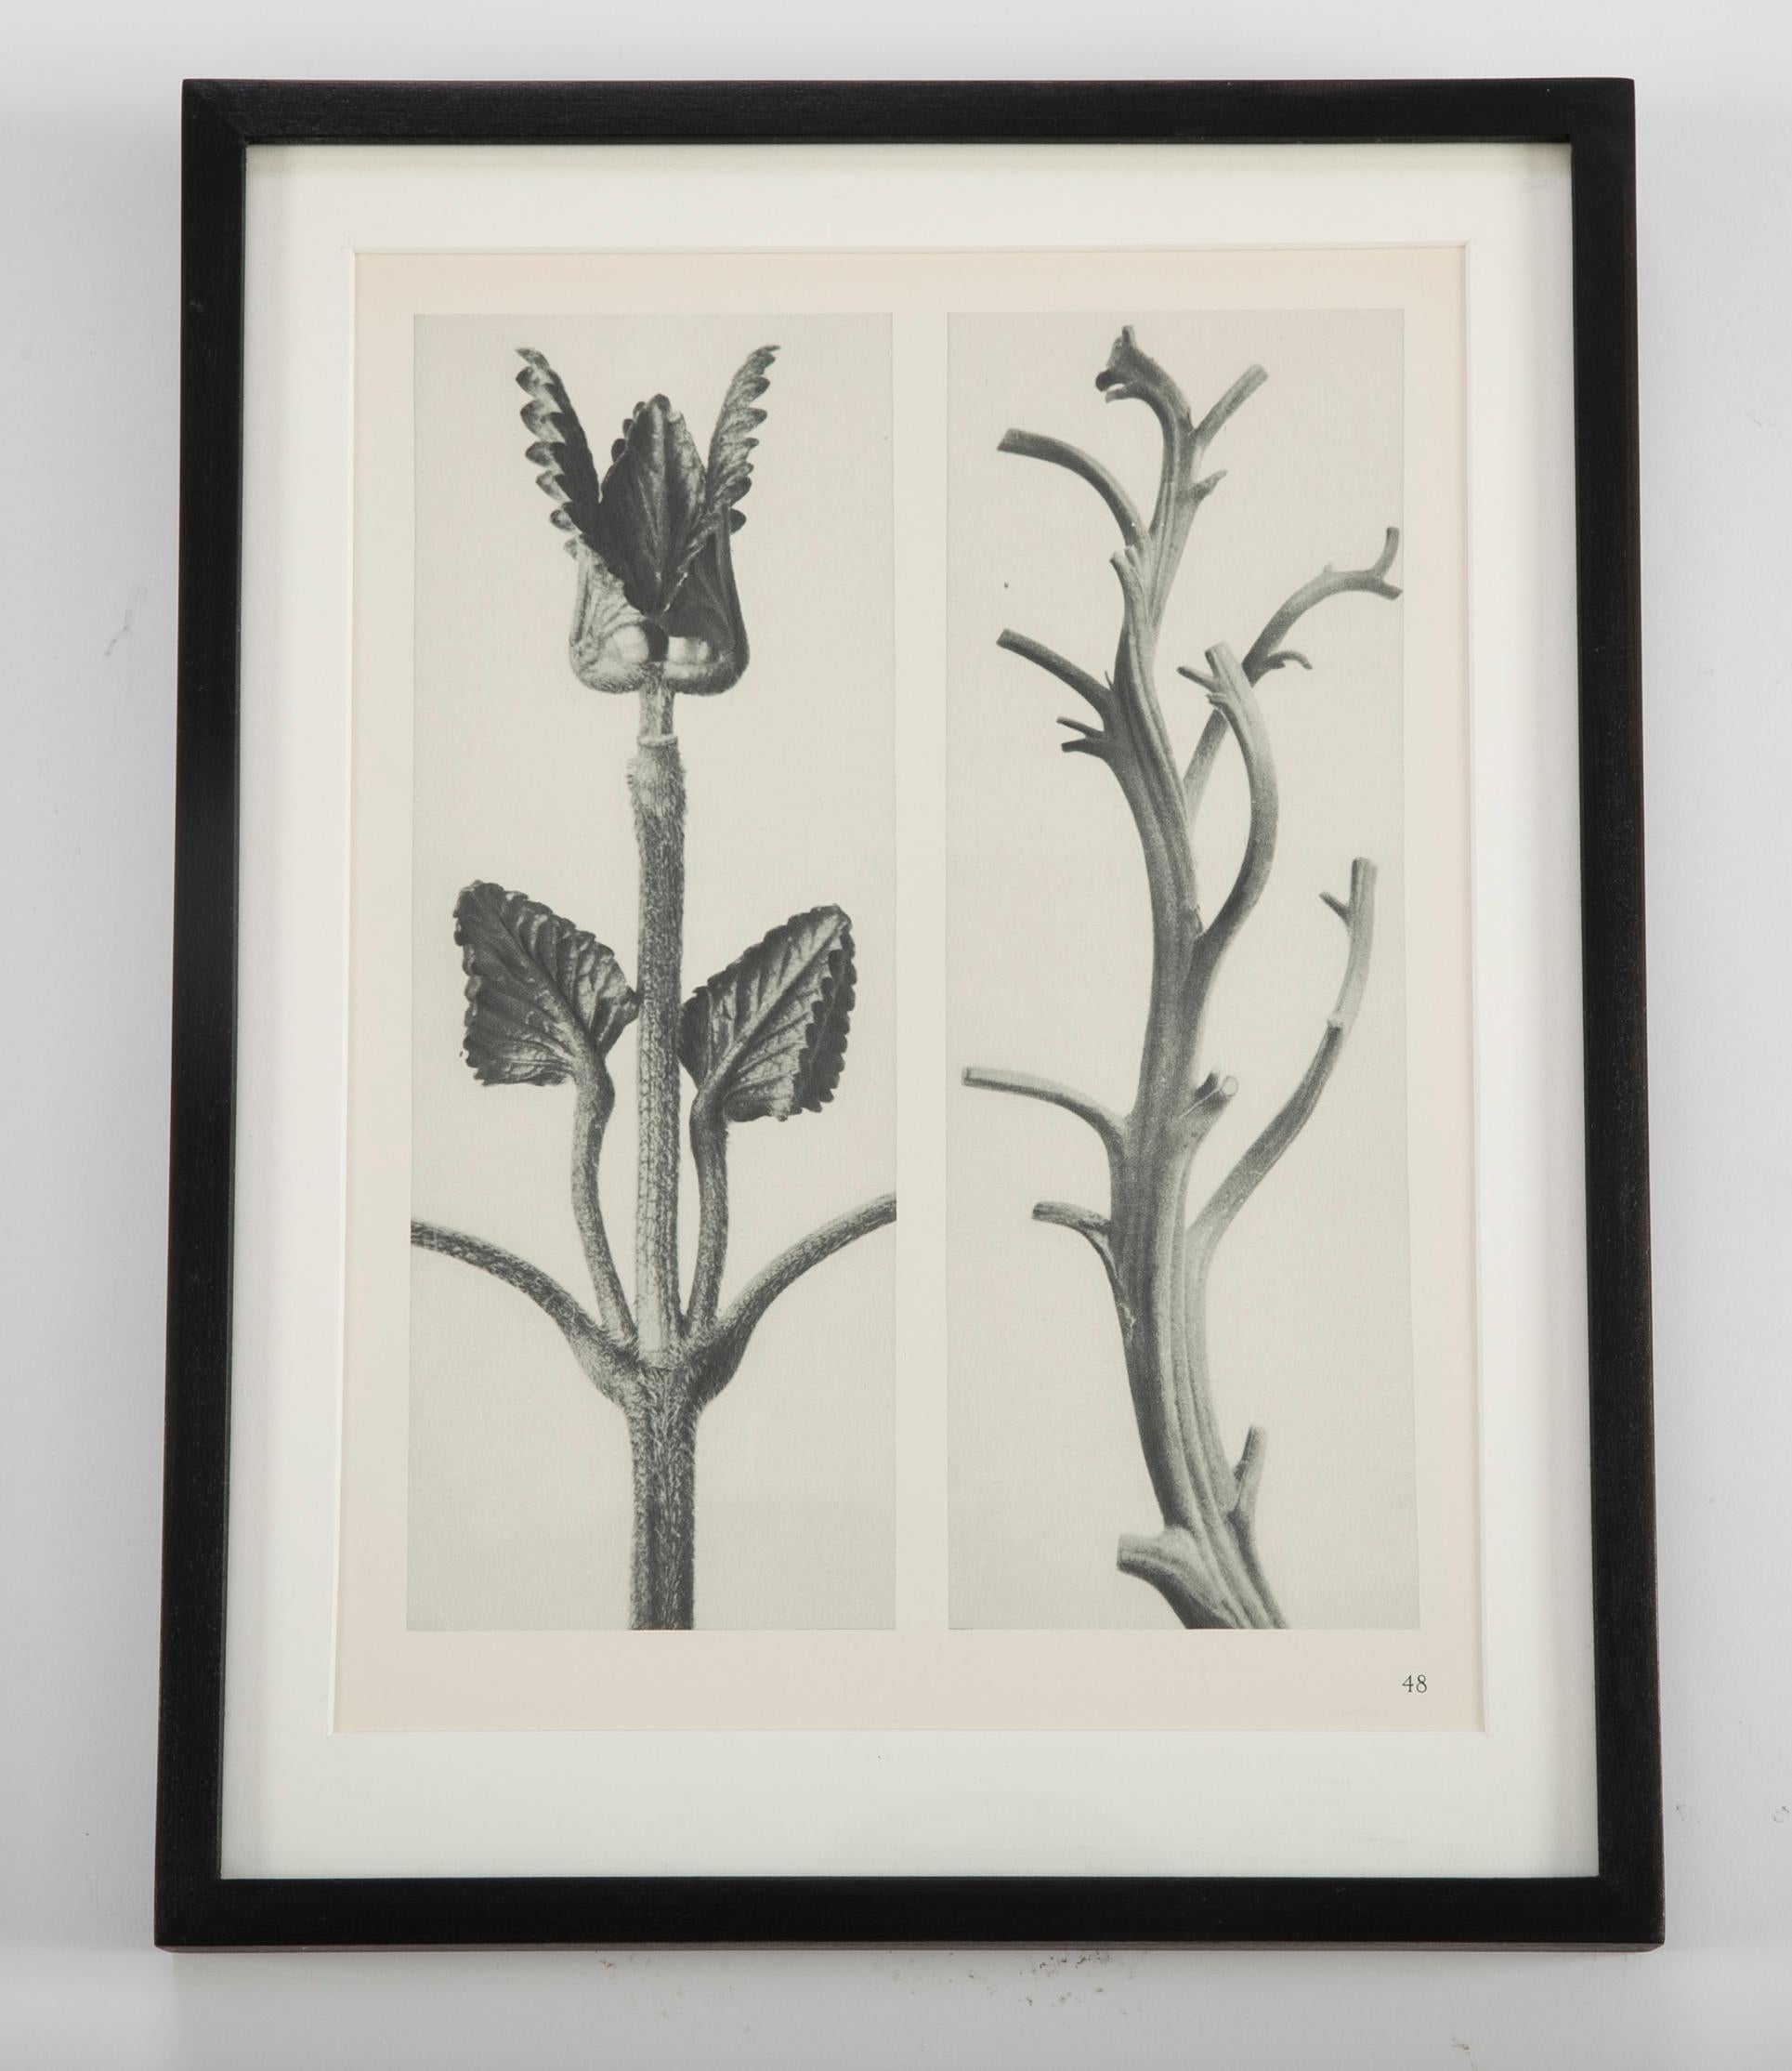 German Botanical Photogravures by Karl Blossfeldt, Berlin 1928, Set of 12